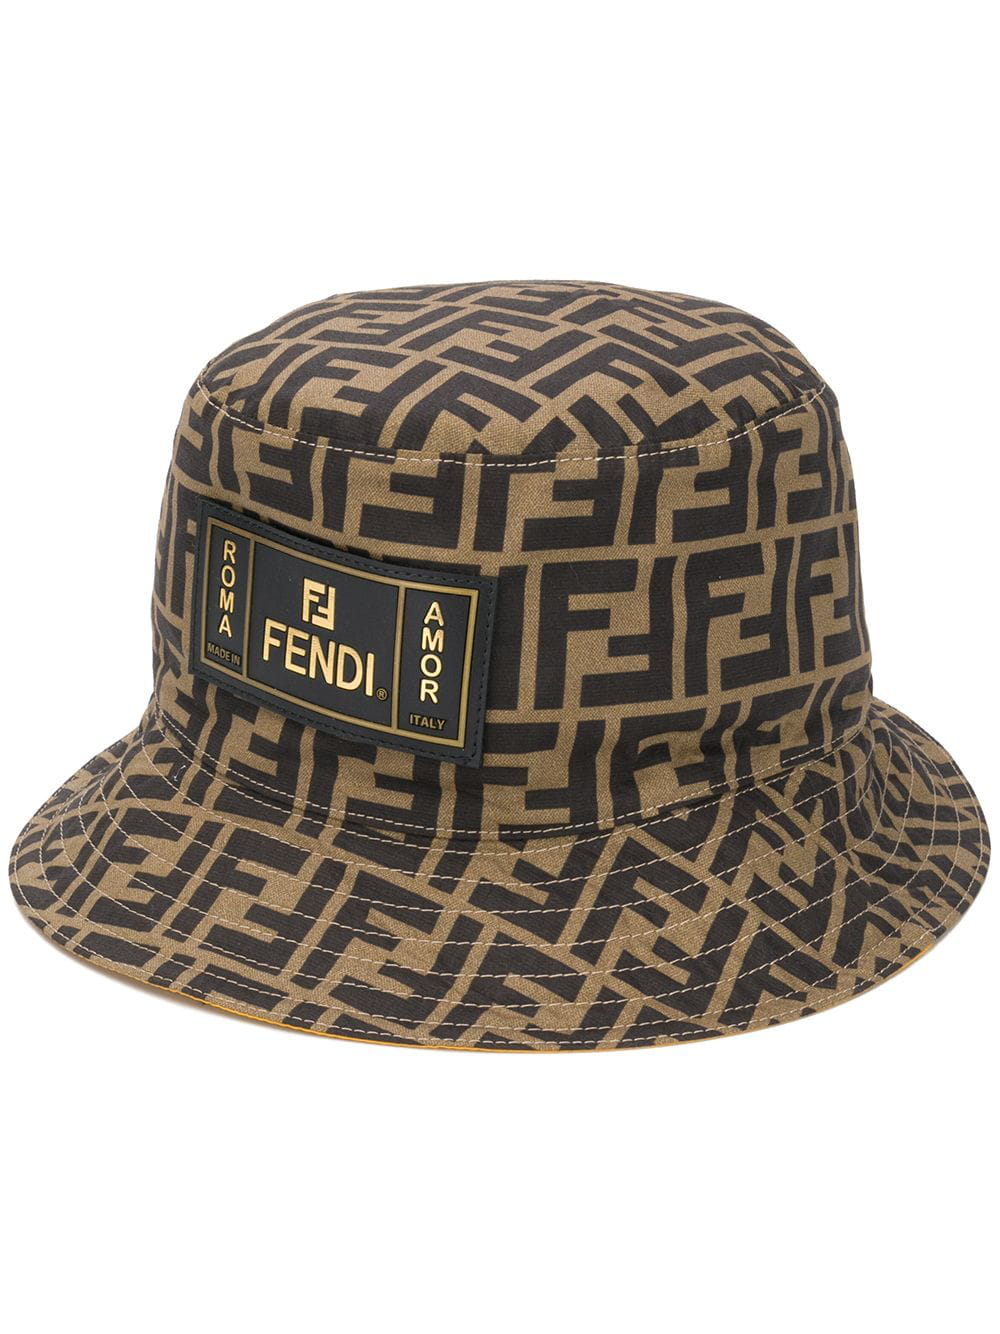 Fendi Ff Print Bucket Hat - Neutrals | ModeSens